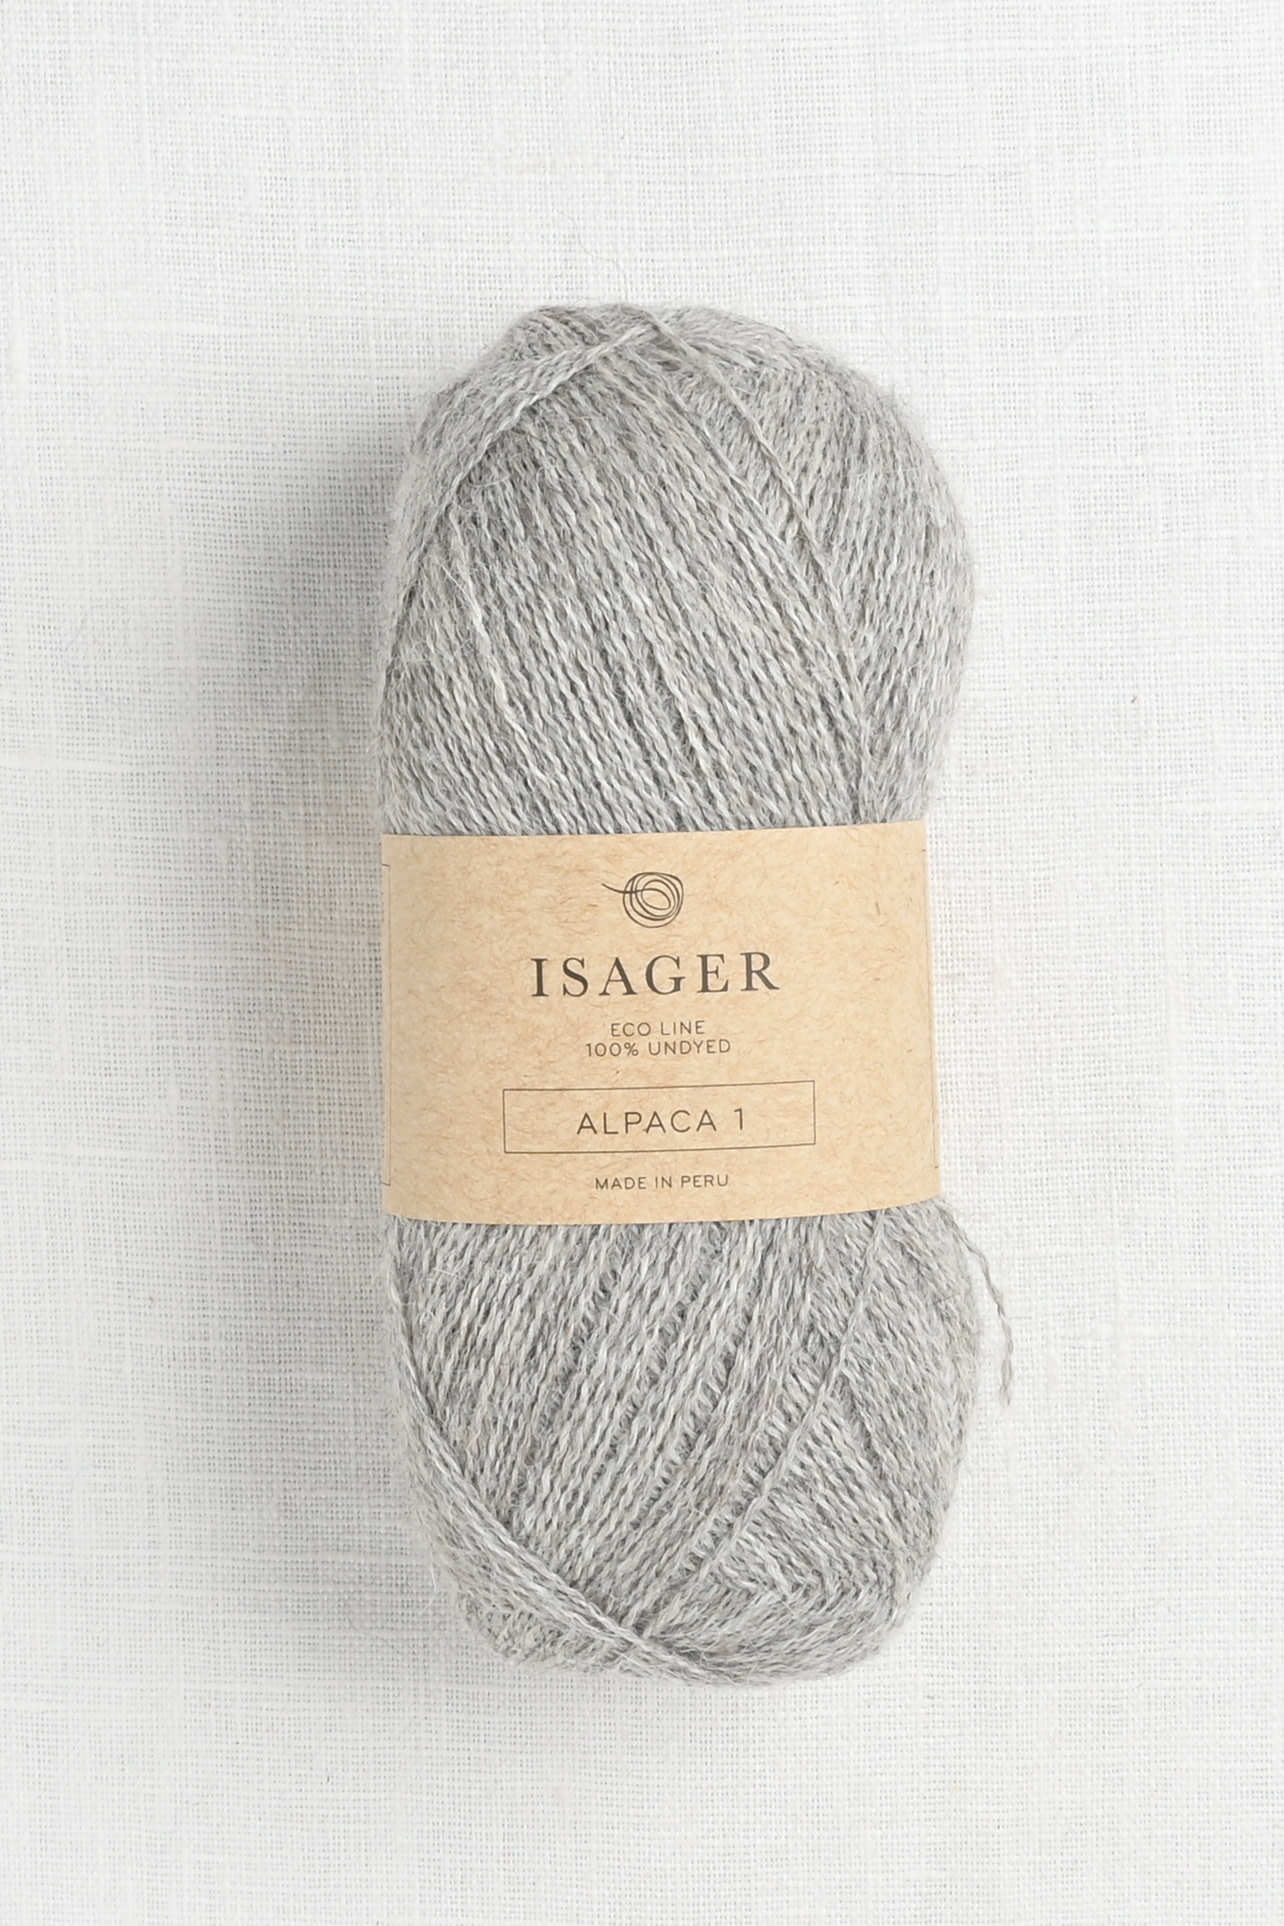 Isager Alpaca 1 E3S Medium Grey Heather Undyed - Wool and Company Yarn